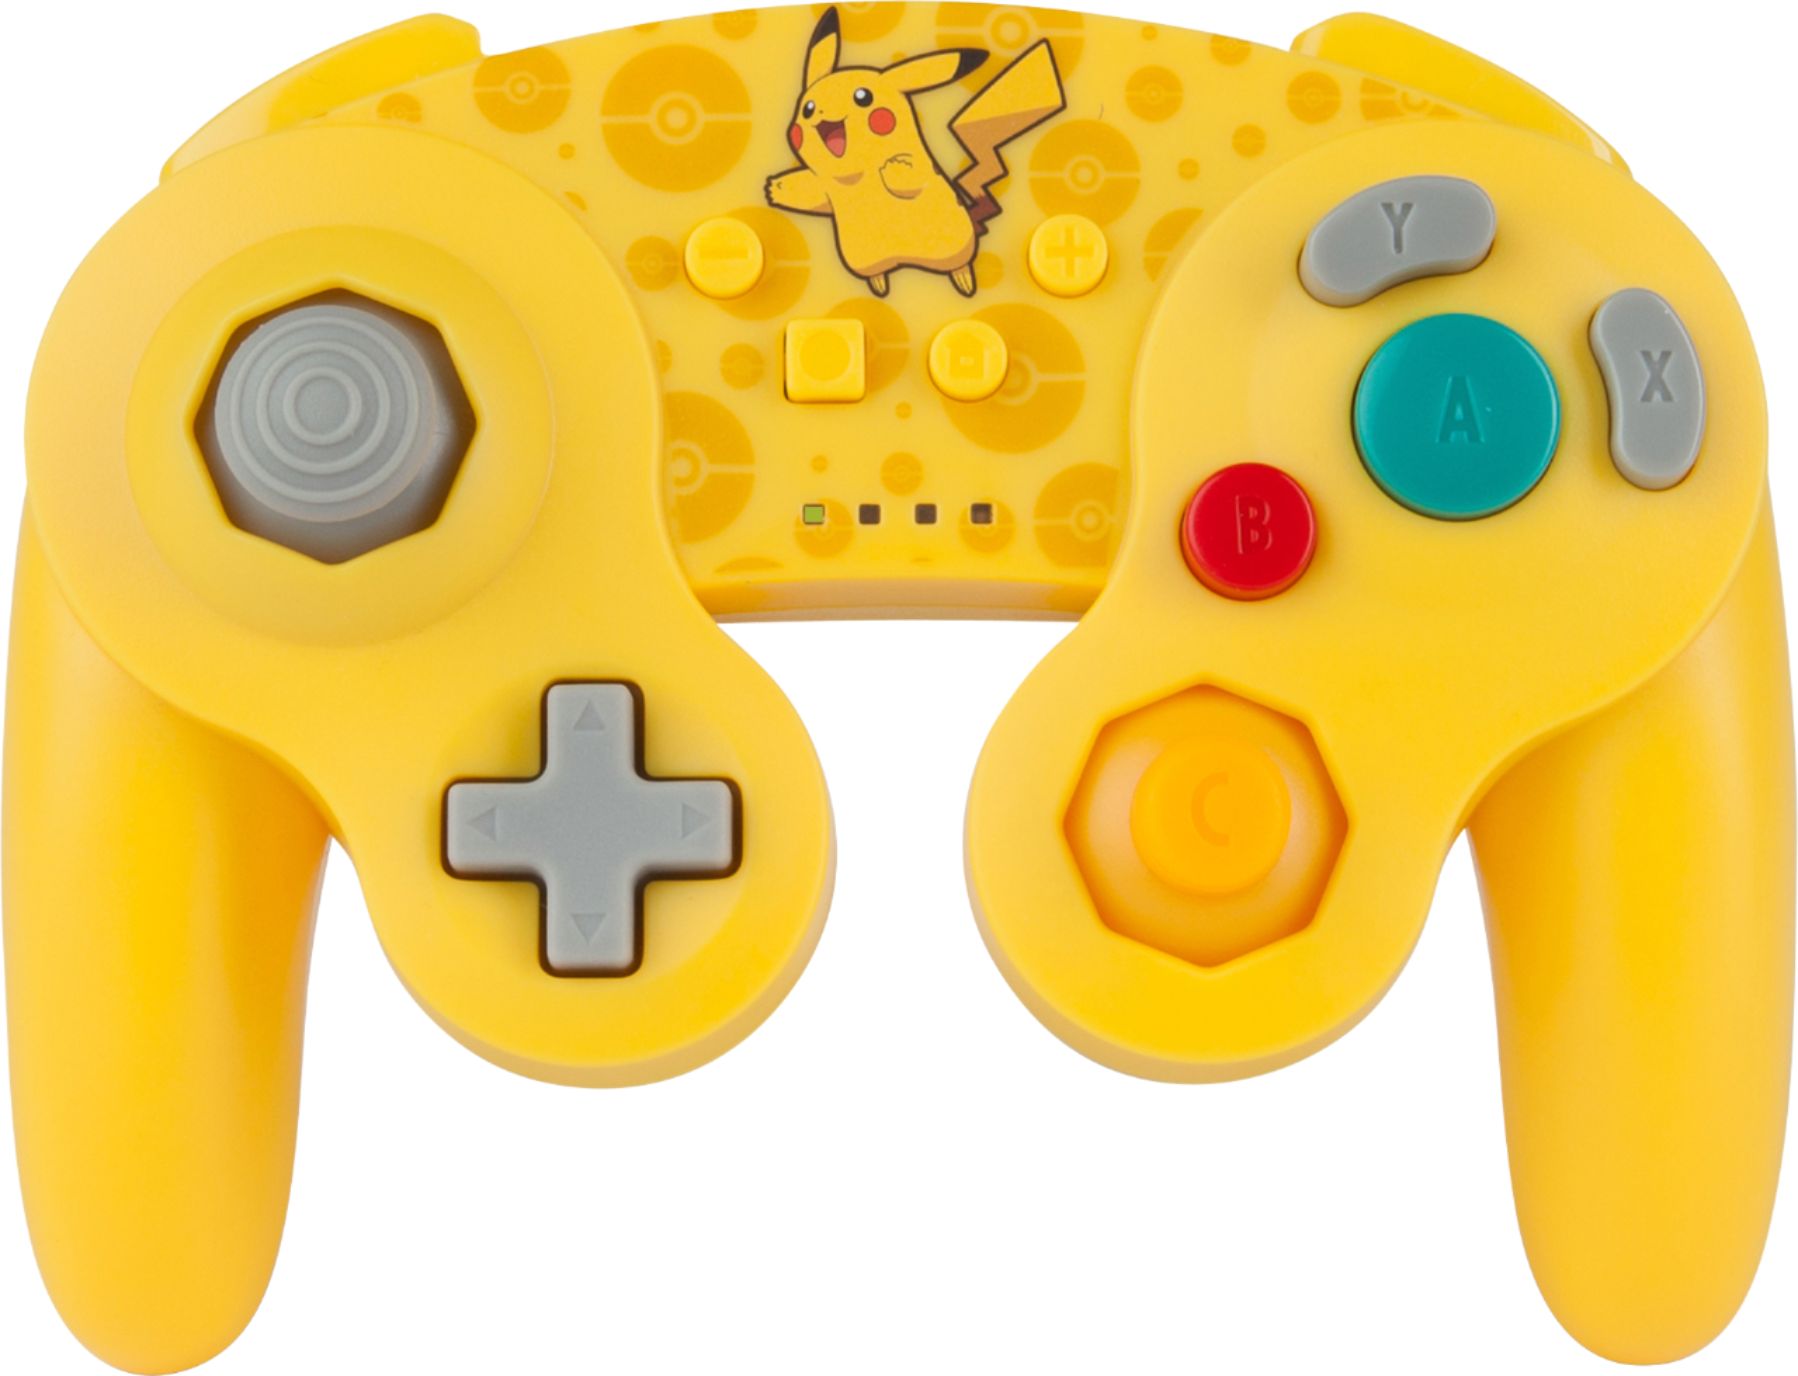 Bda Power A Gamecube Style Wireless Controller For Nintendo Switch Pokemon Pikachu